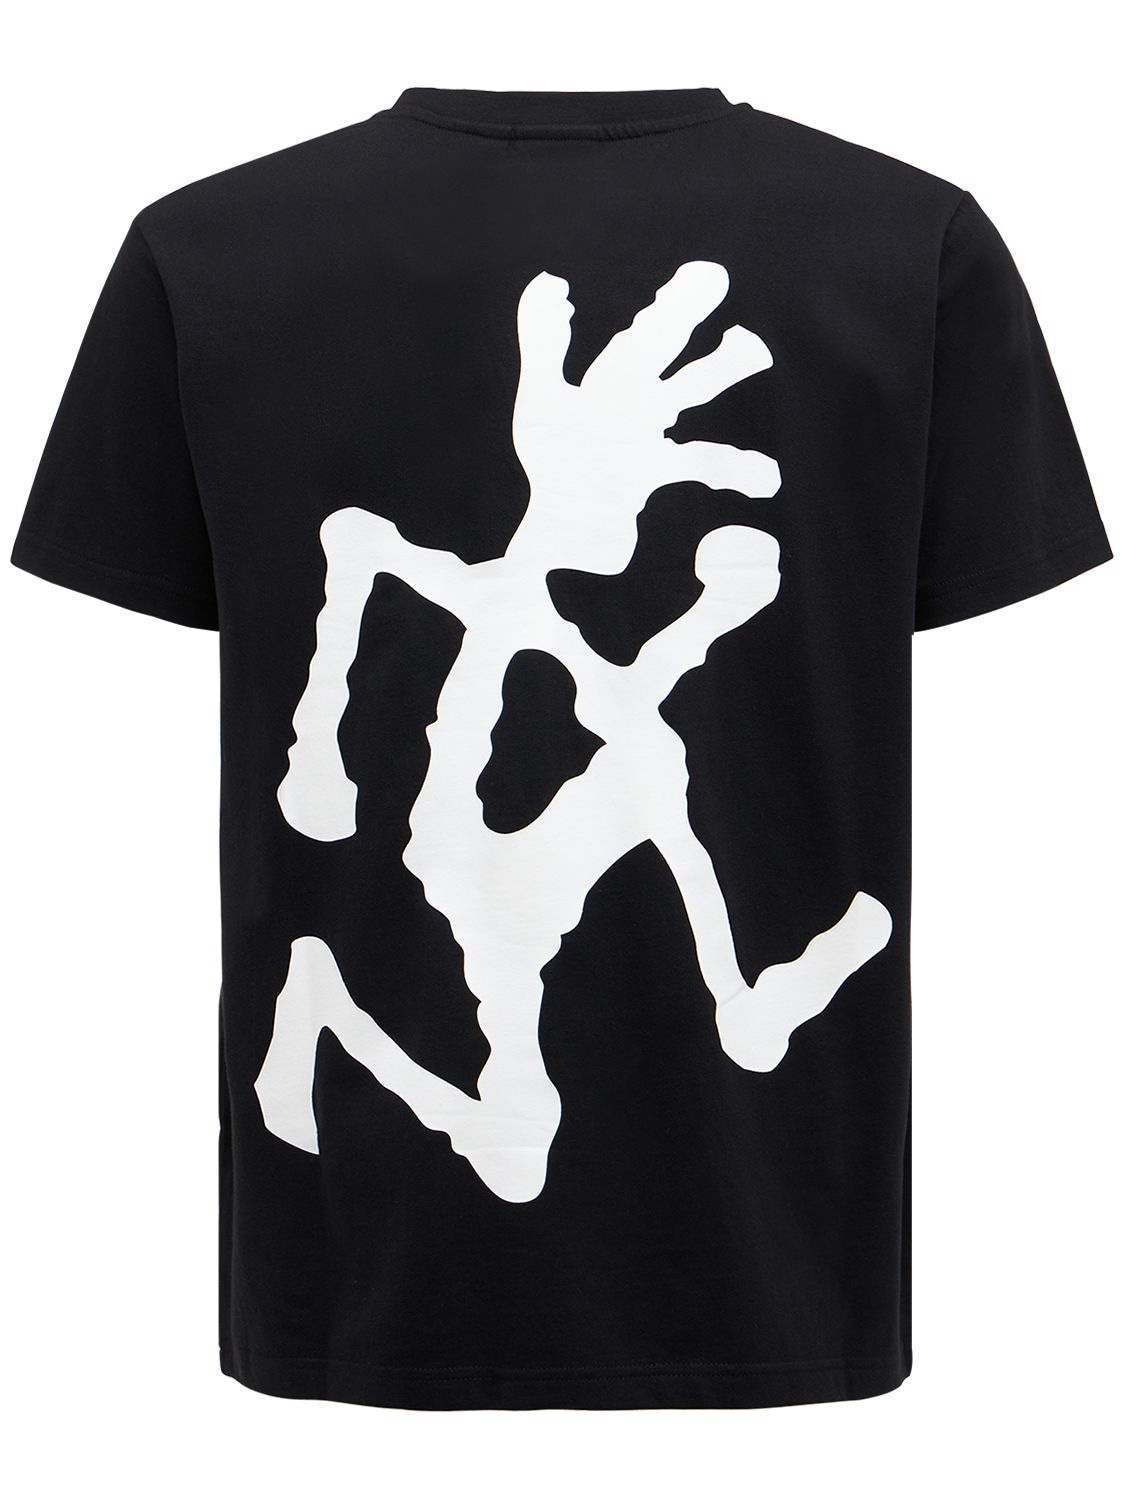 T-shirt En Coton Imprimé Logo - GRAMICCI - Modalova